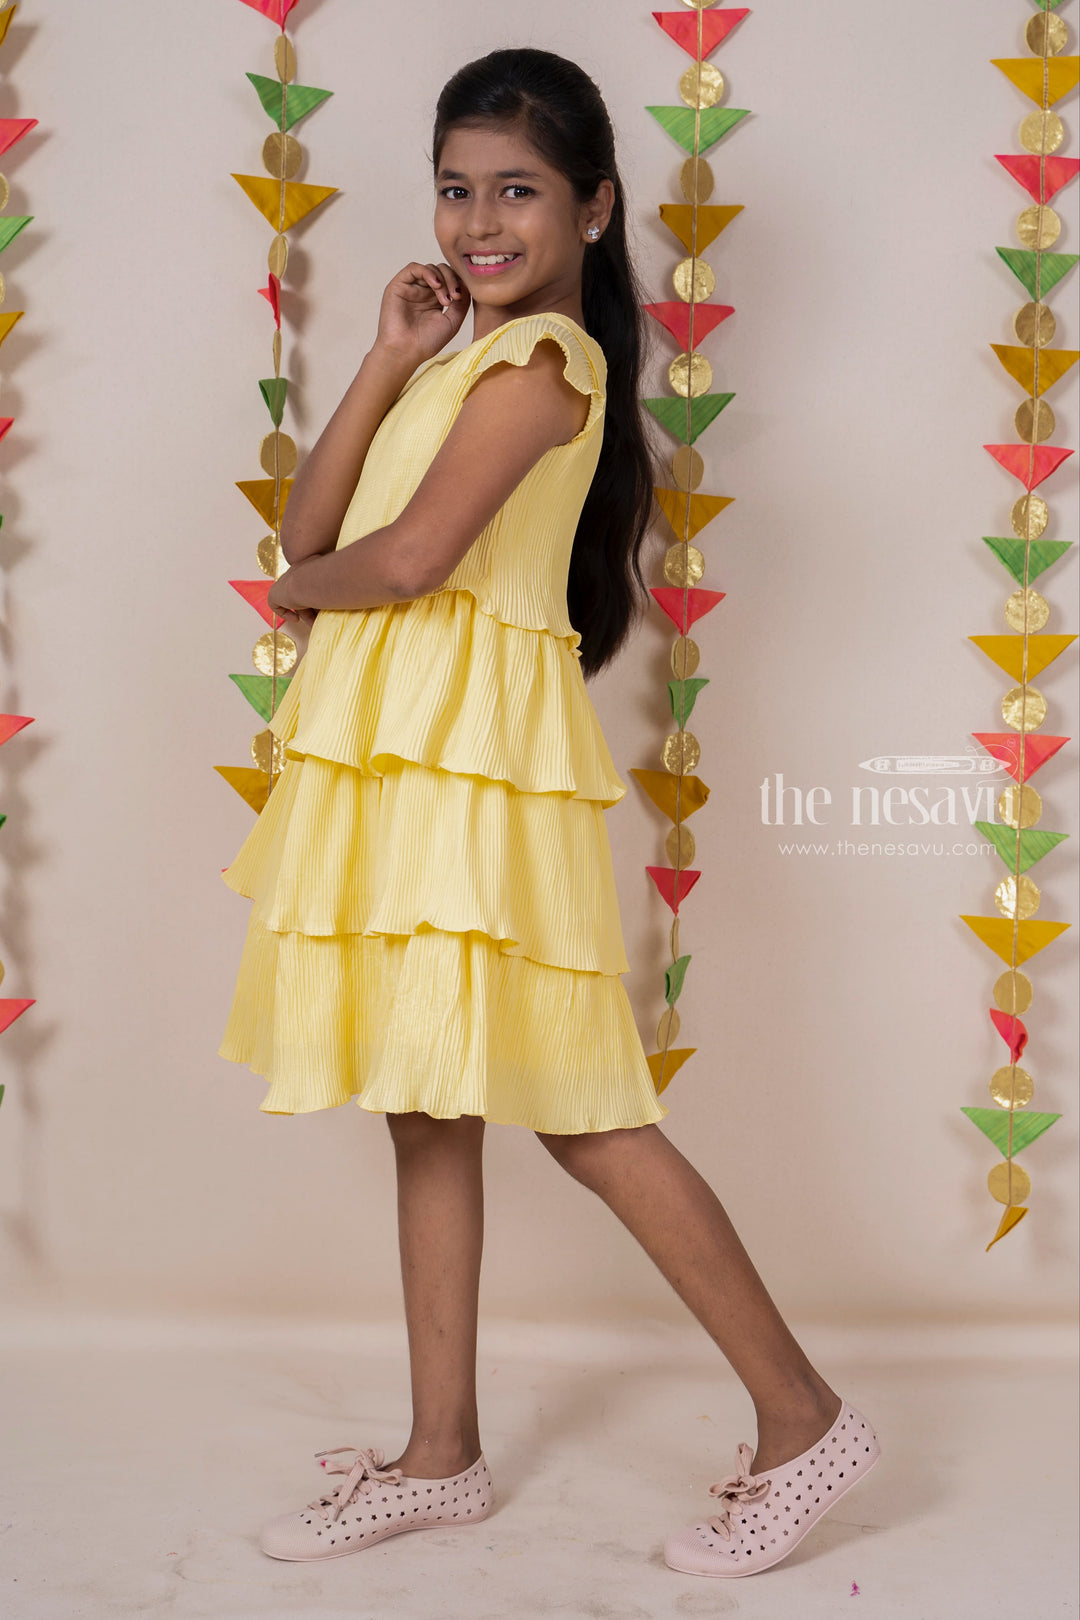 The Nesavu Frocks & Dresses Yellow Semi-Crushed Crepe Designer Cotton Gown For Girls psr silks Nesavu